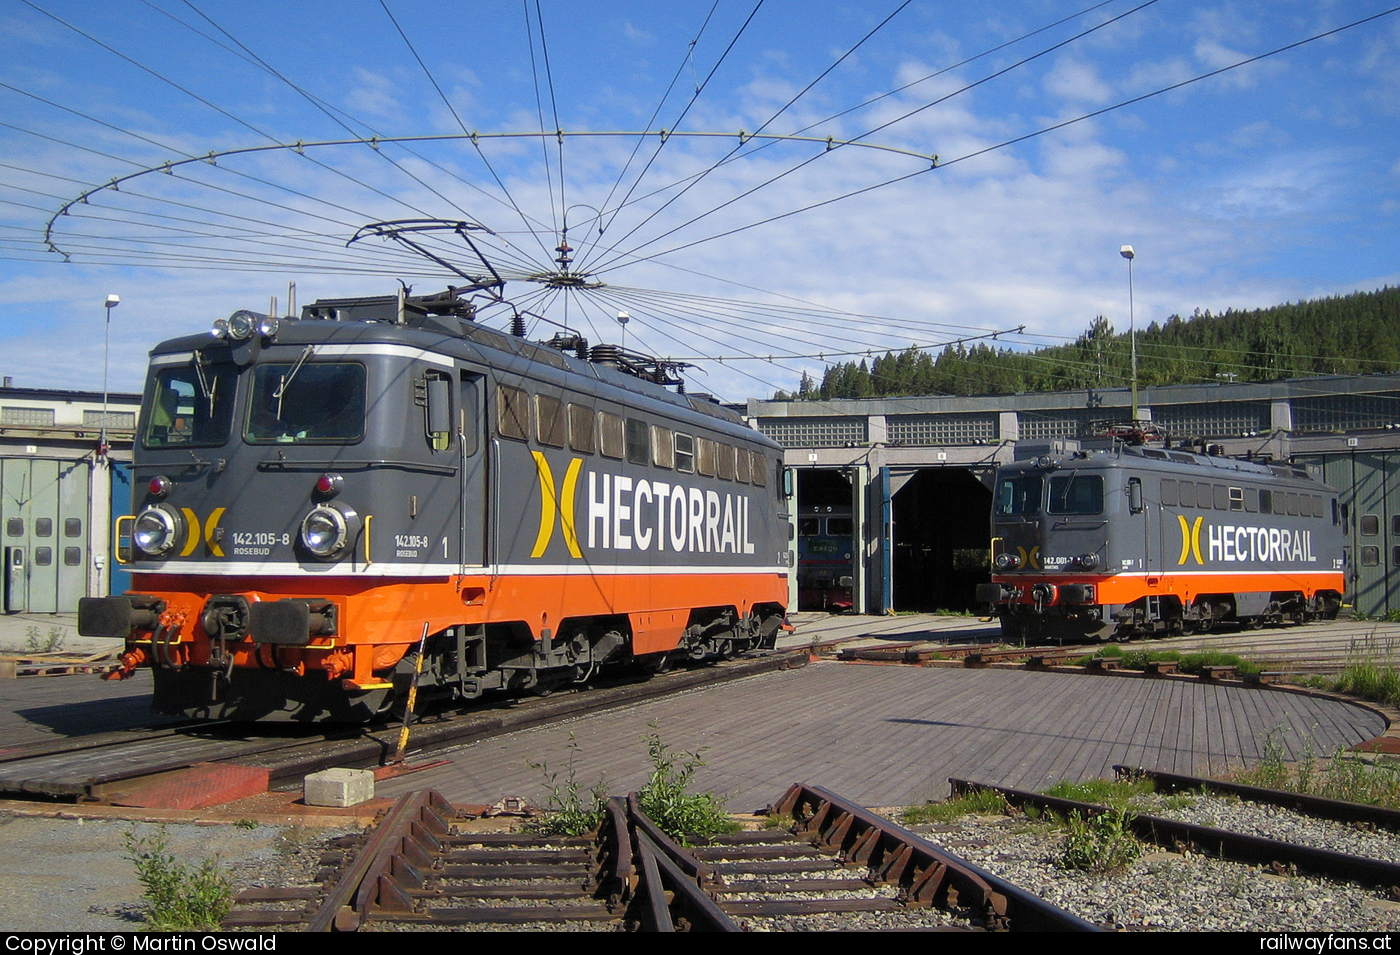 Hectorrail 142 105 in Ånge - ex ÖBB 1142 558, rechts 142 001 ex ÖBB 1142 661.   Railwayfans